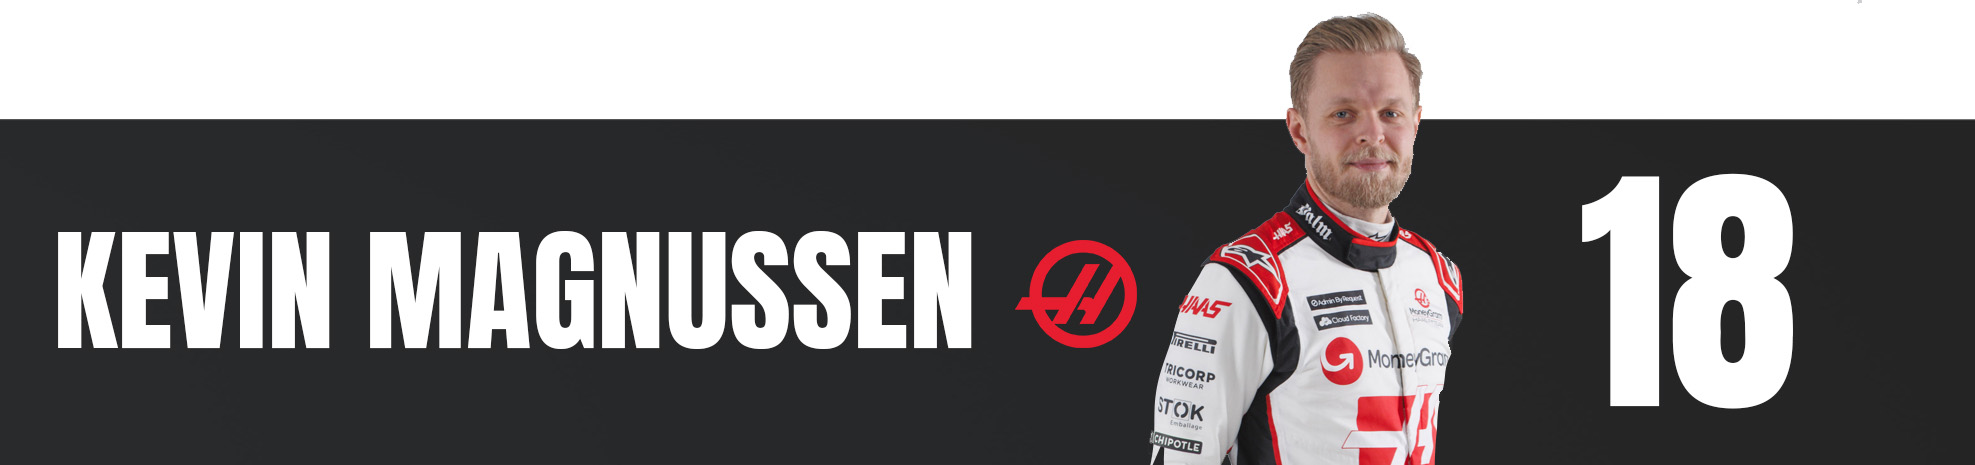 Kevin Magnussen Haas F1 Austrian GP ranking